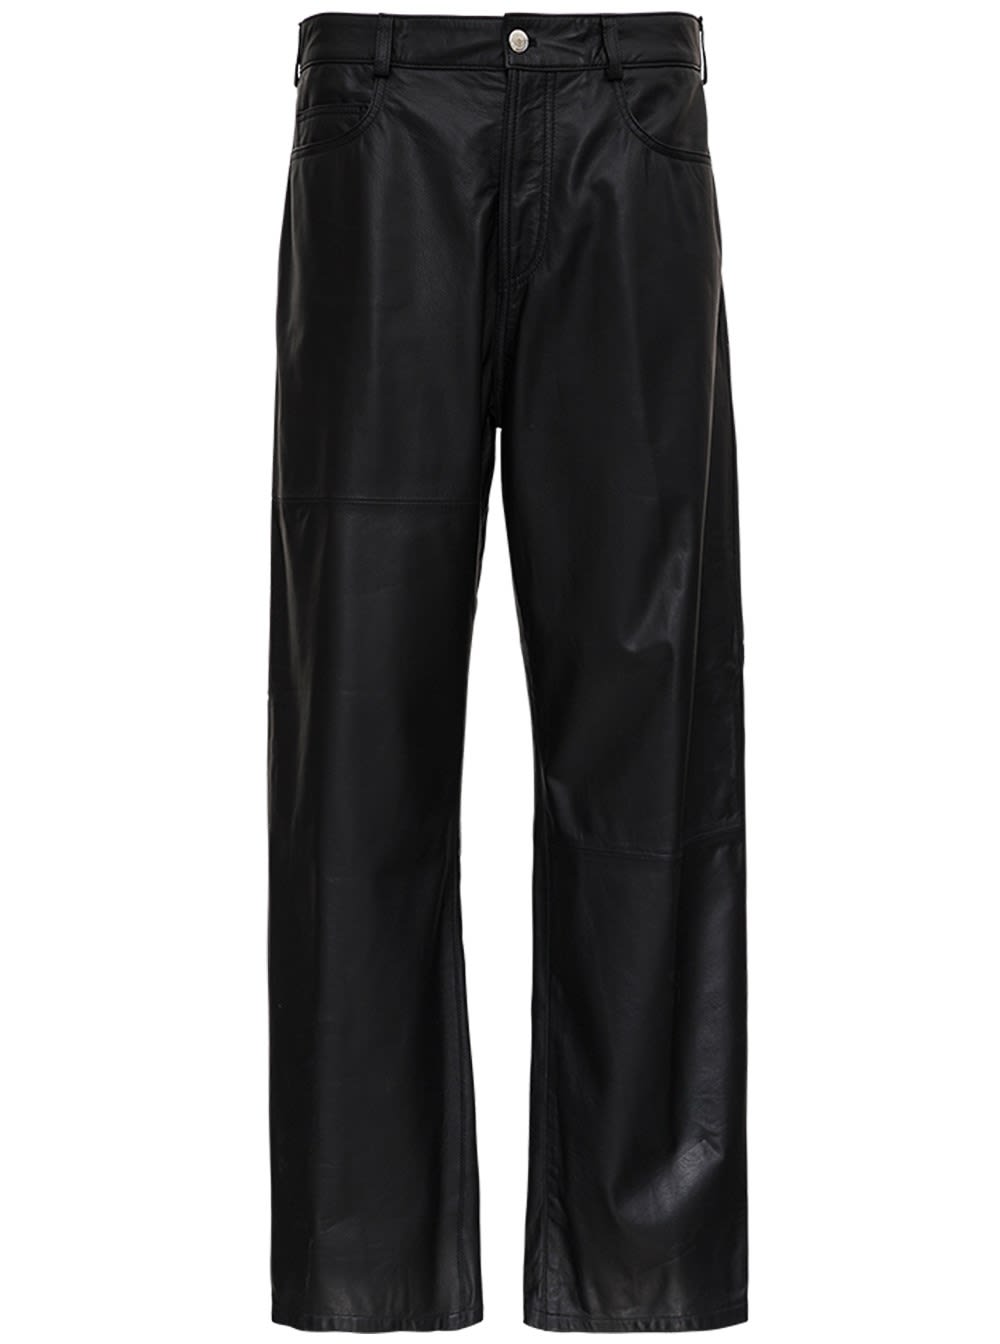 Trussardi 80s Black Kansas Leather Pants